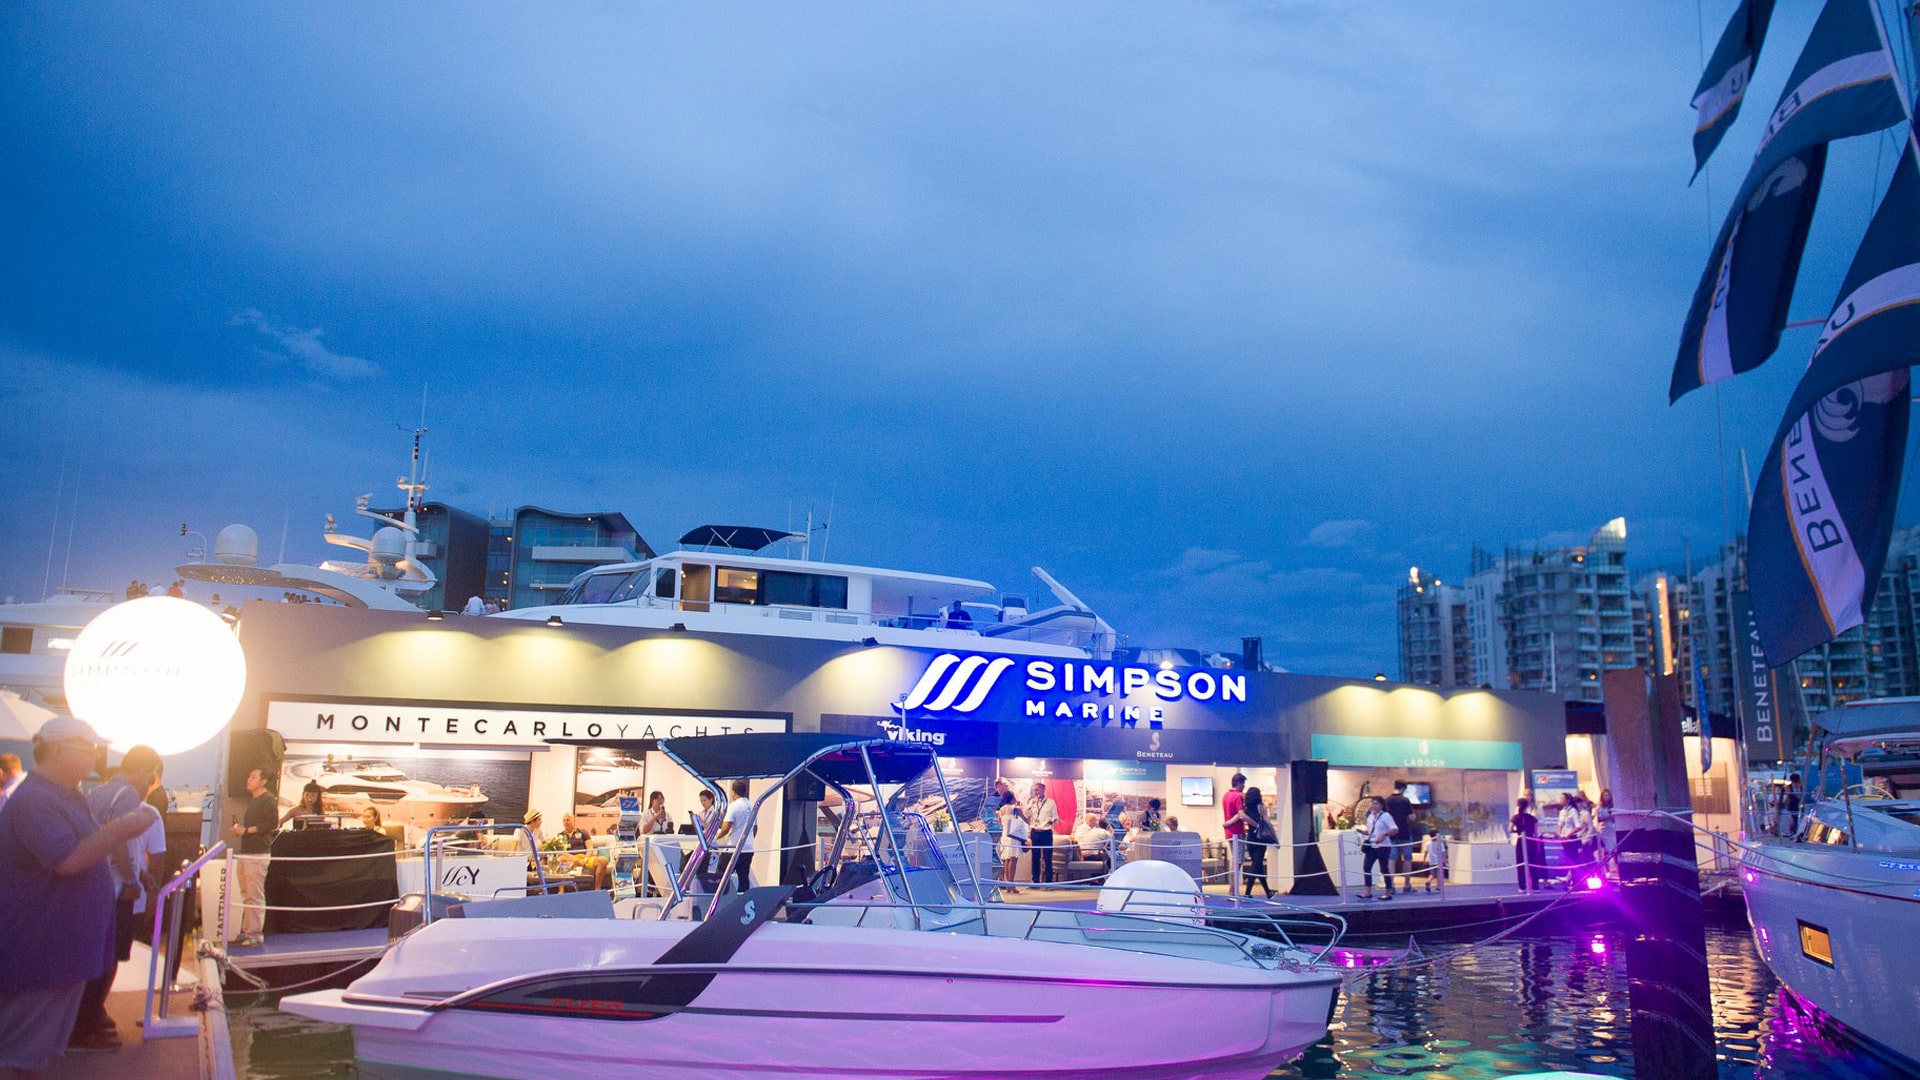 tsc_tubelar_exhibits_sg-yacht-show-2018-05_1920x1080-min